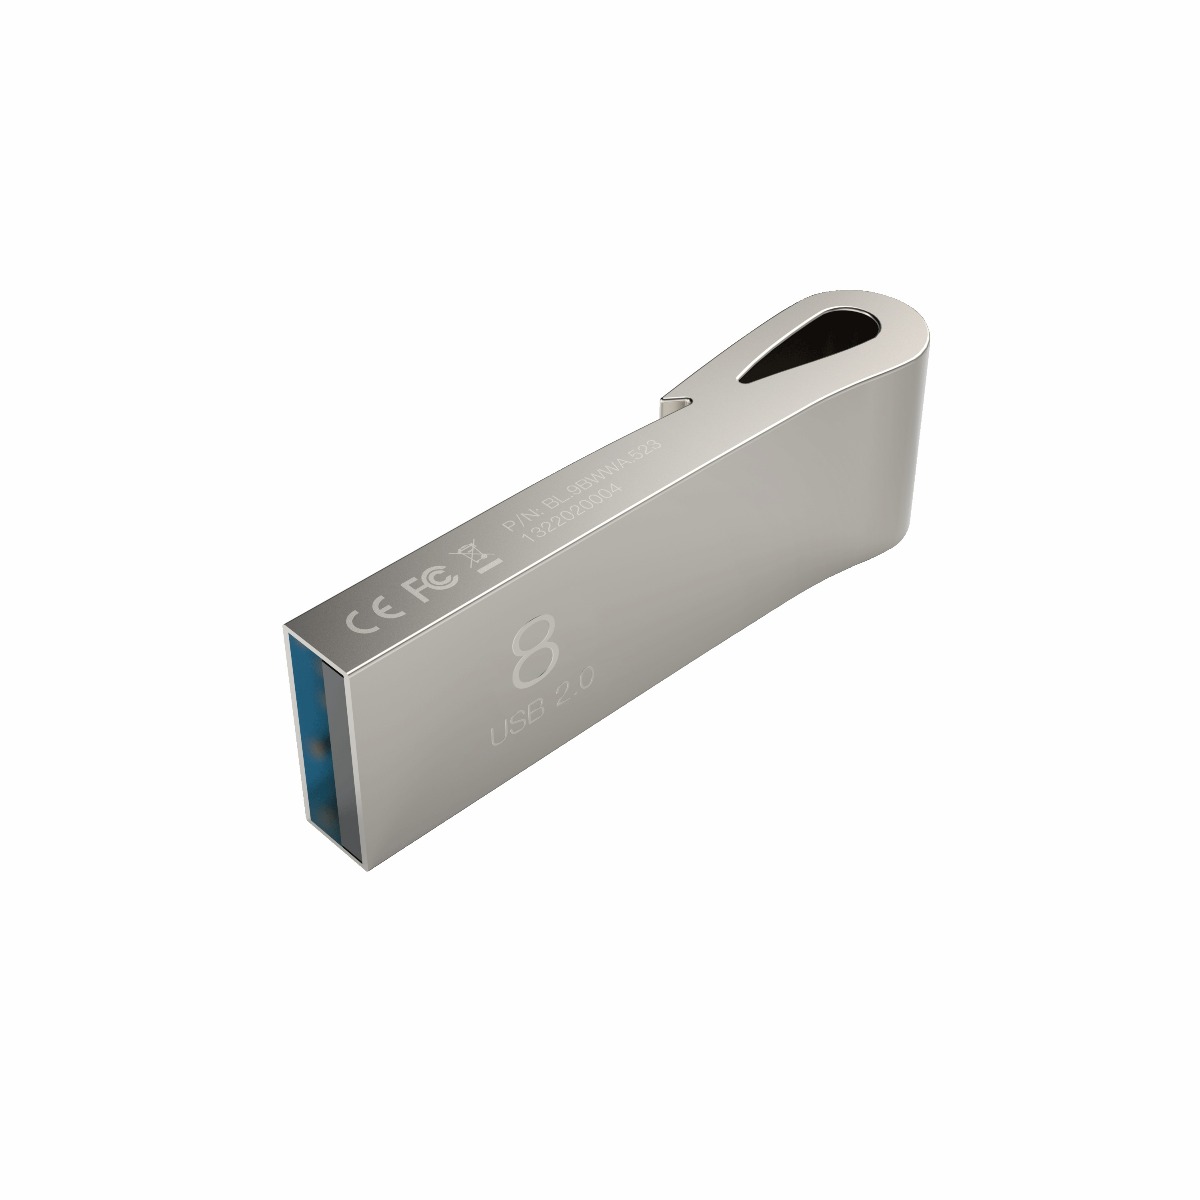 MEMORIA USB 2.0 ACER UF200 8GB 30MB/S METALICA (BL.9BWWA.501)